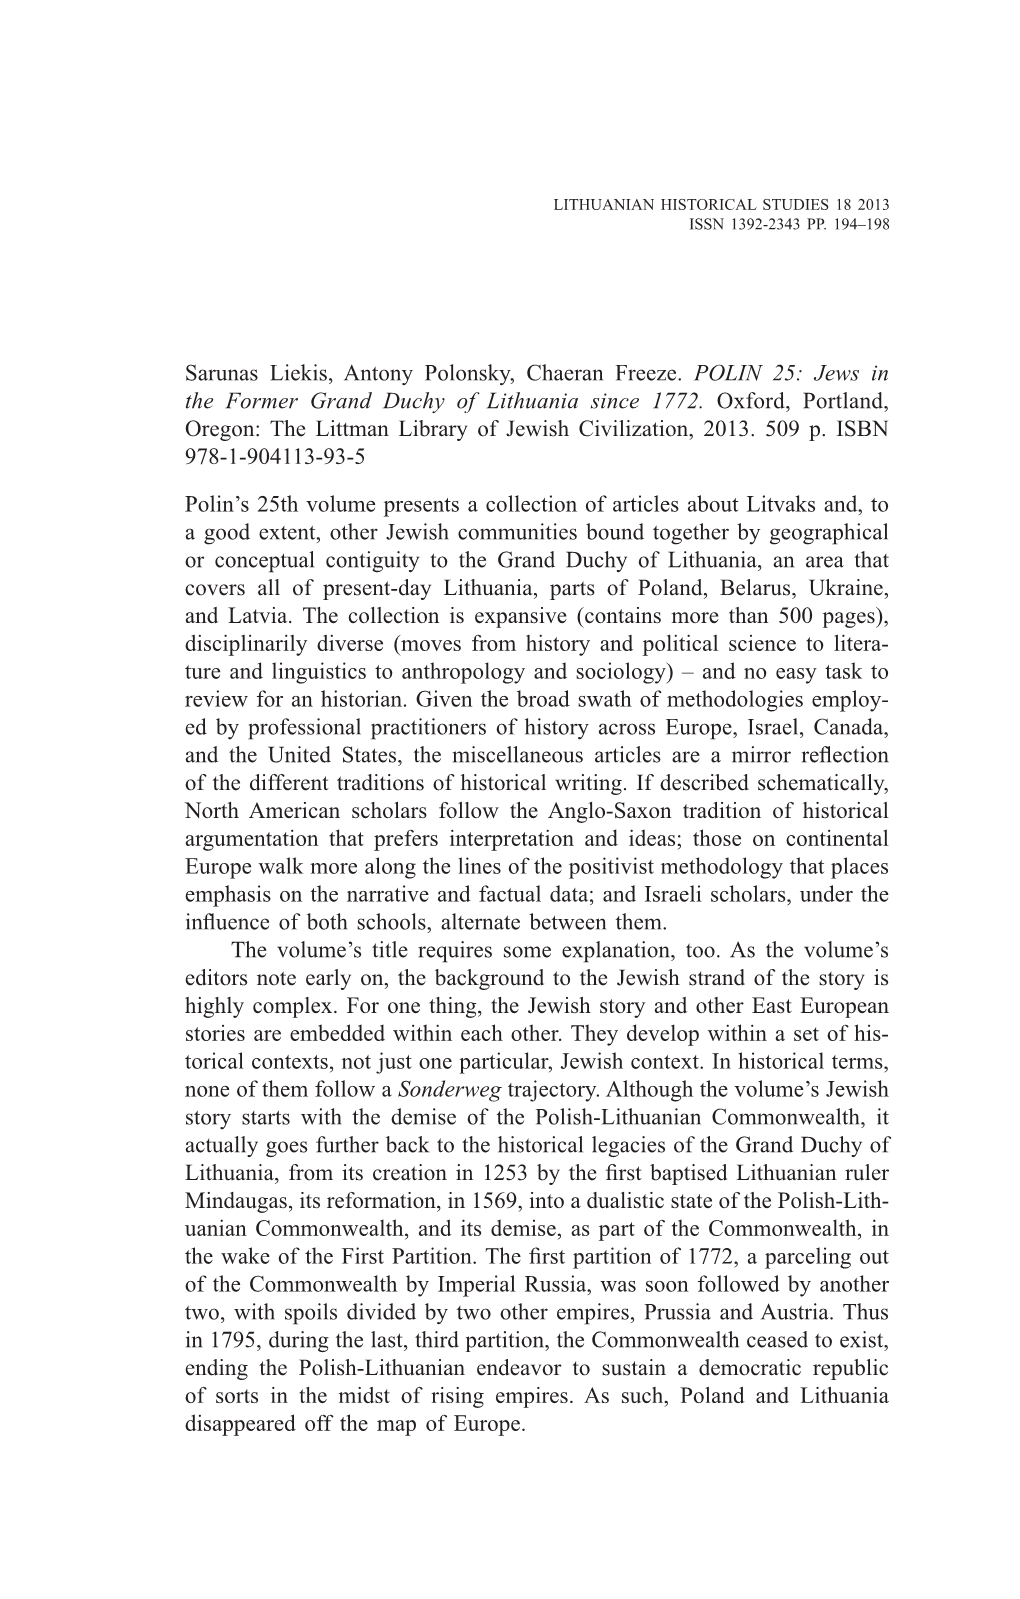 Sarunas Liekis, Antony Polonsky, Chaeran Freeze. POLIN 25: Jews in the Former Grand Duchy of Lithuania Since 1772. Oxford, Port